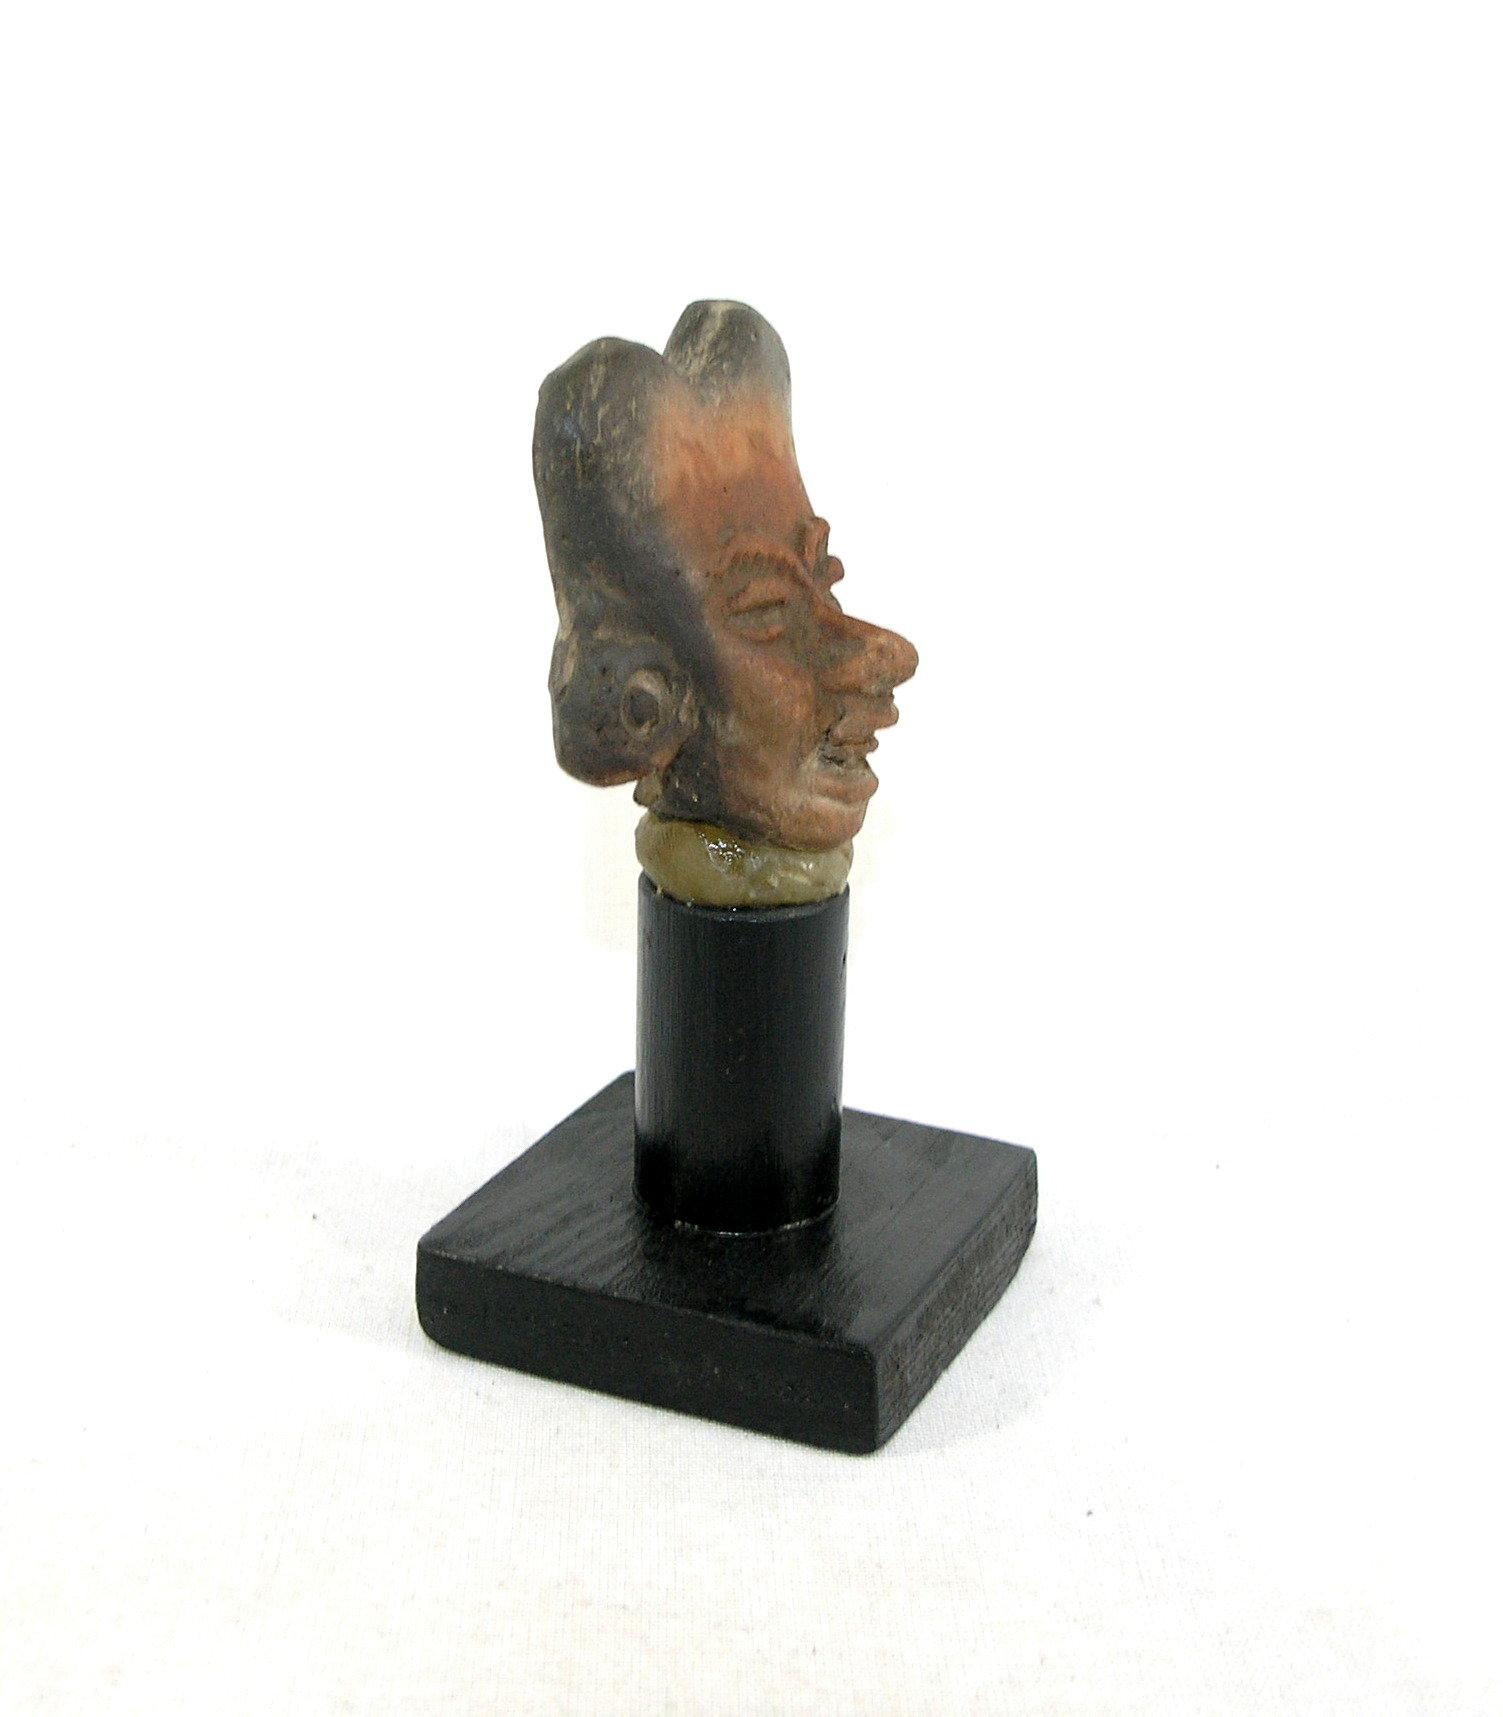 Vintage American Indian Stone Carved Aztec Figure Head On Wooden Pedestal.